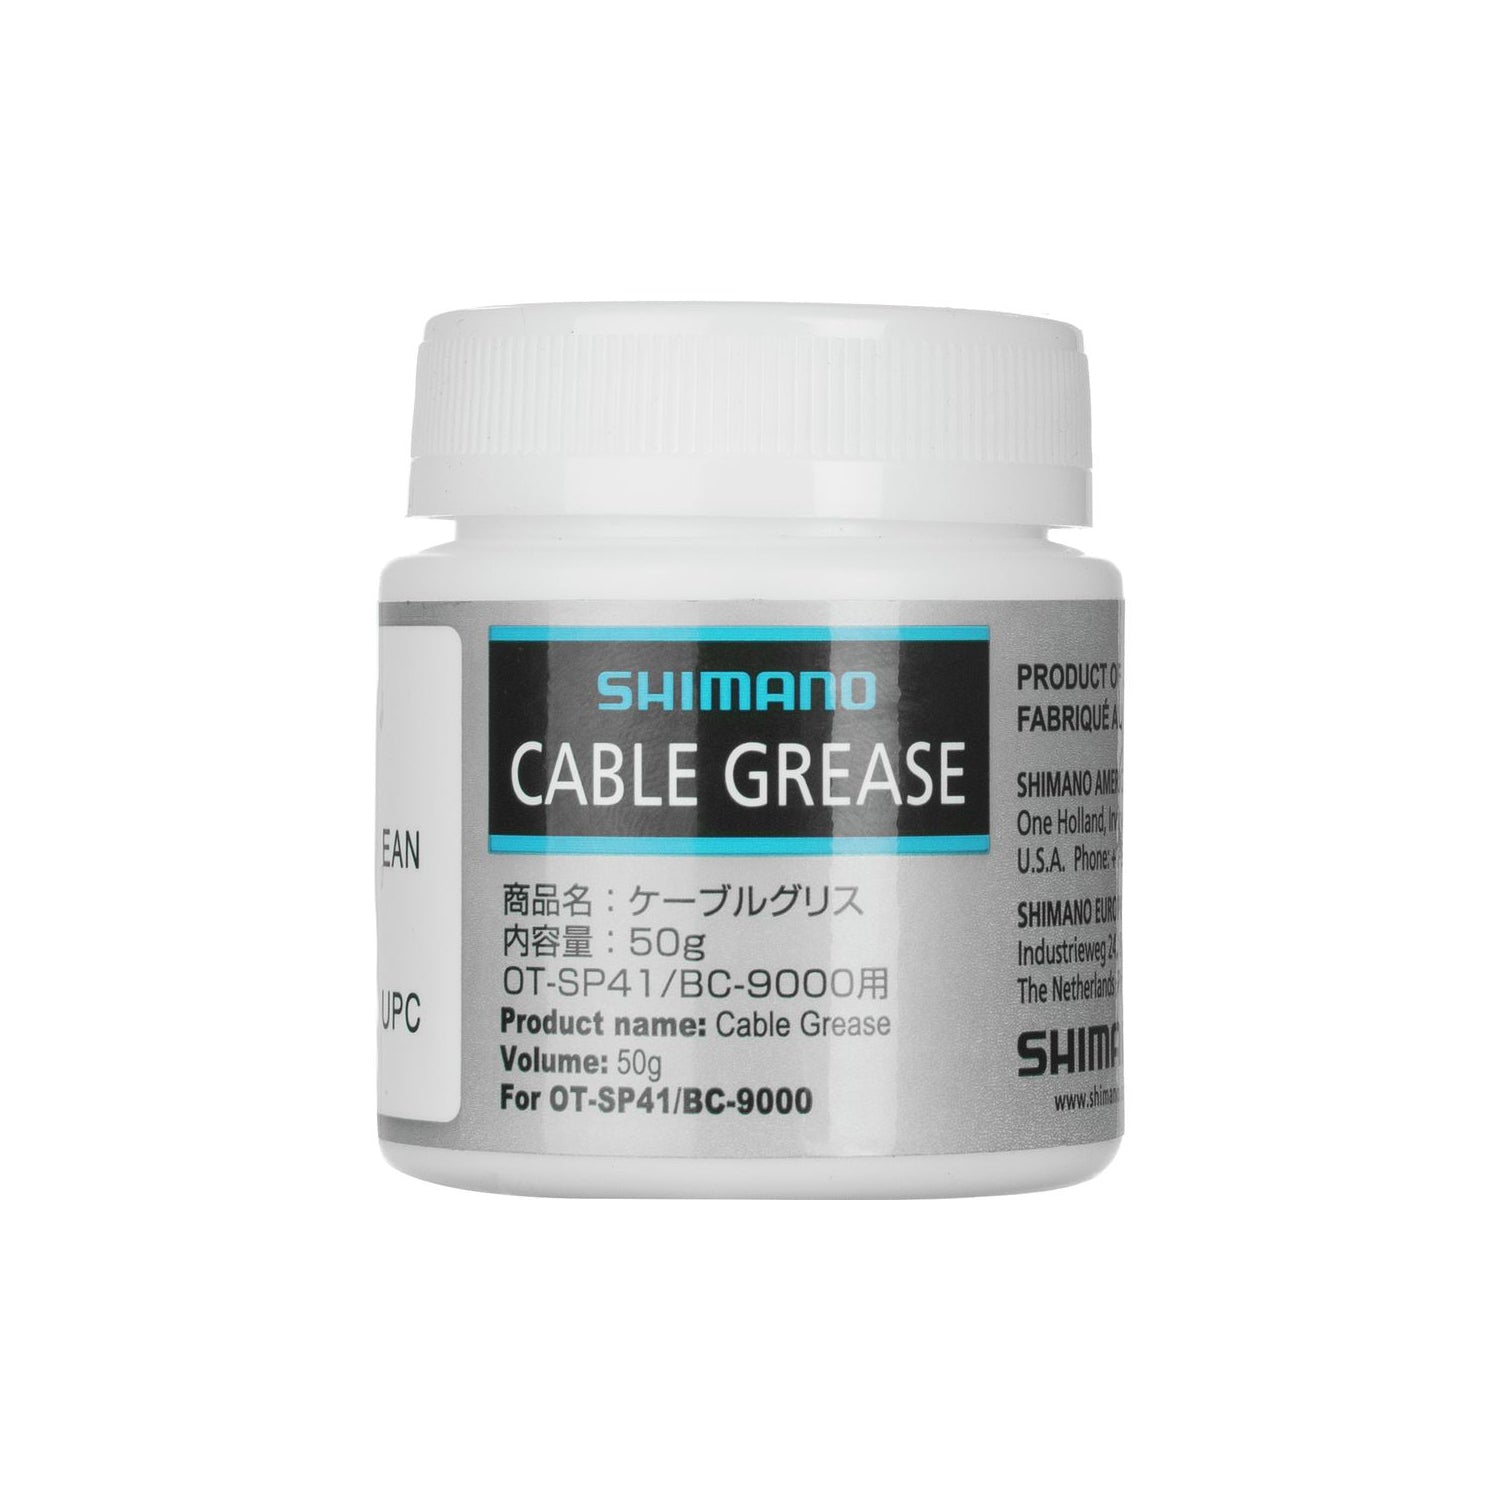 SHIMANO Cable Grease